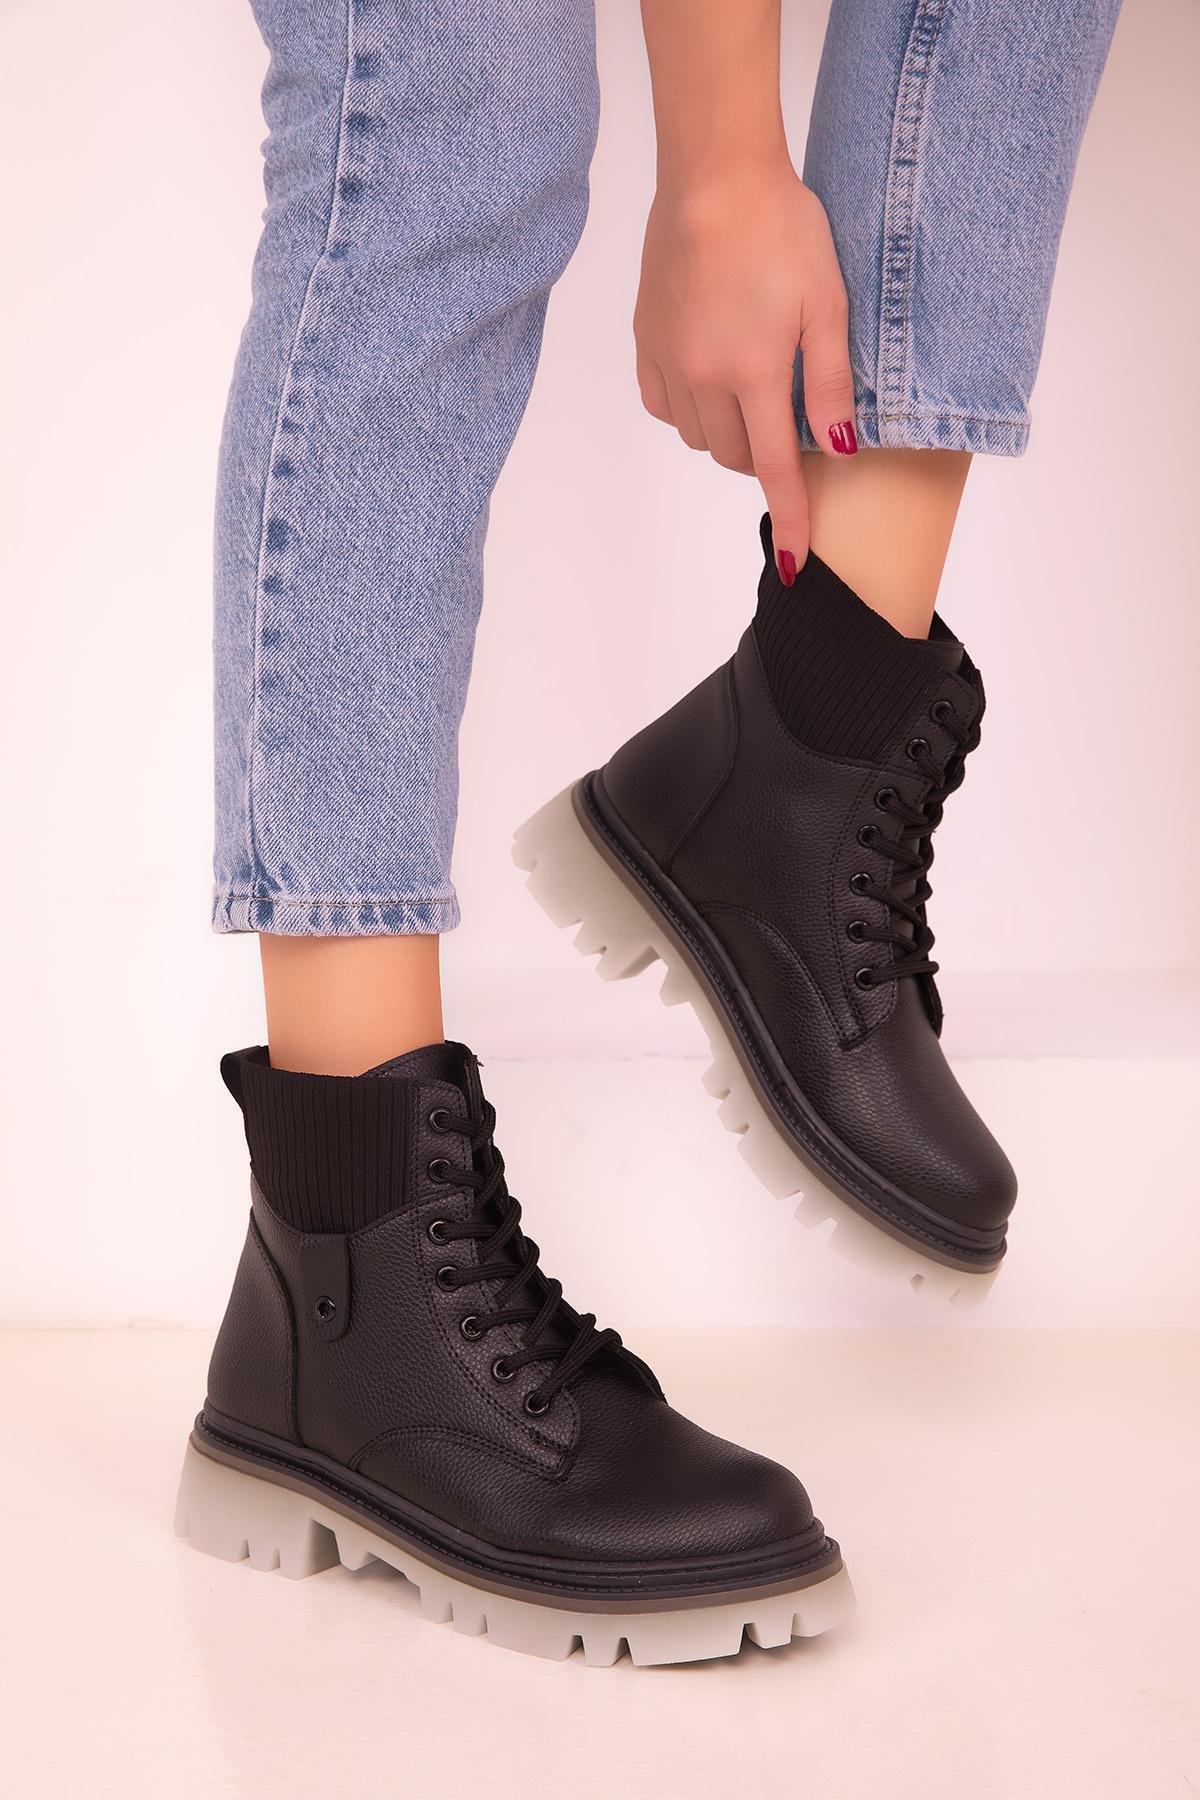 SOHO - Black Leather Lace-Up Boots